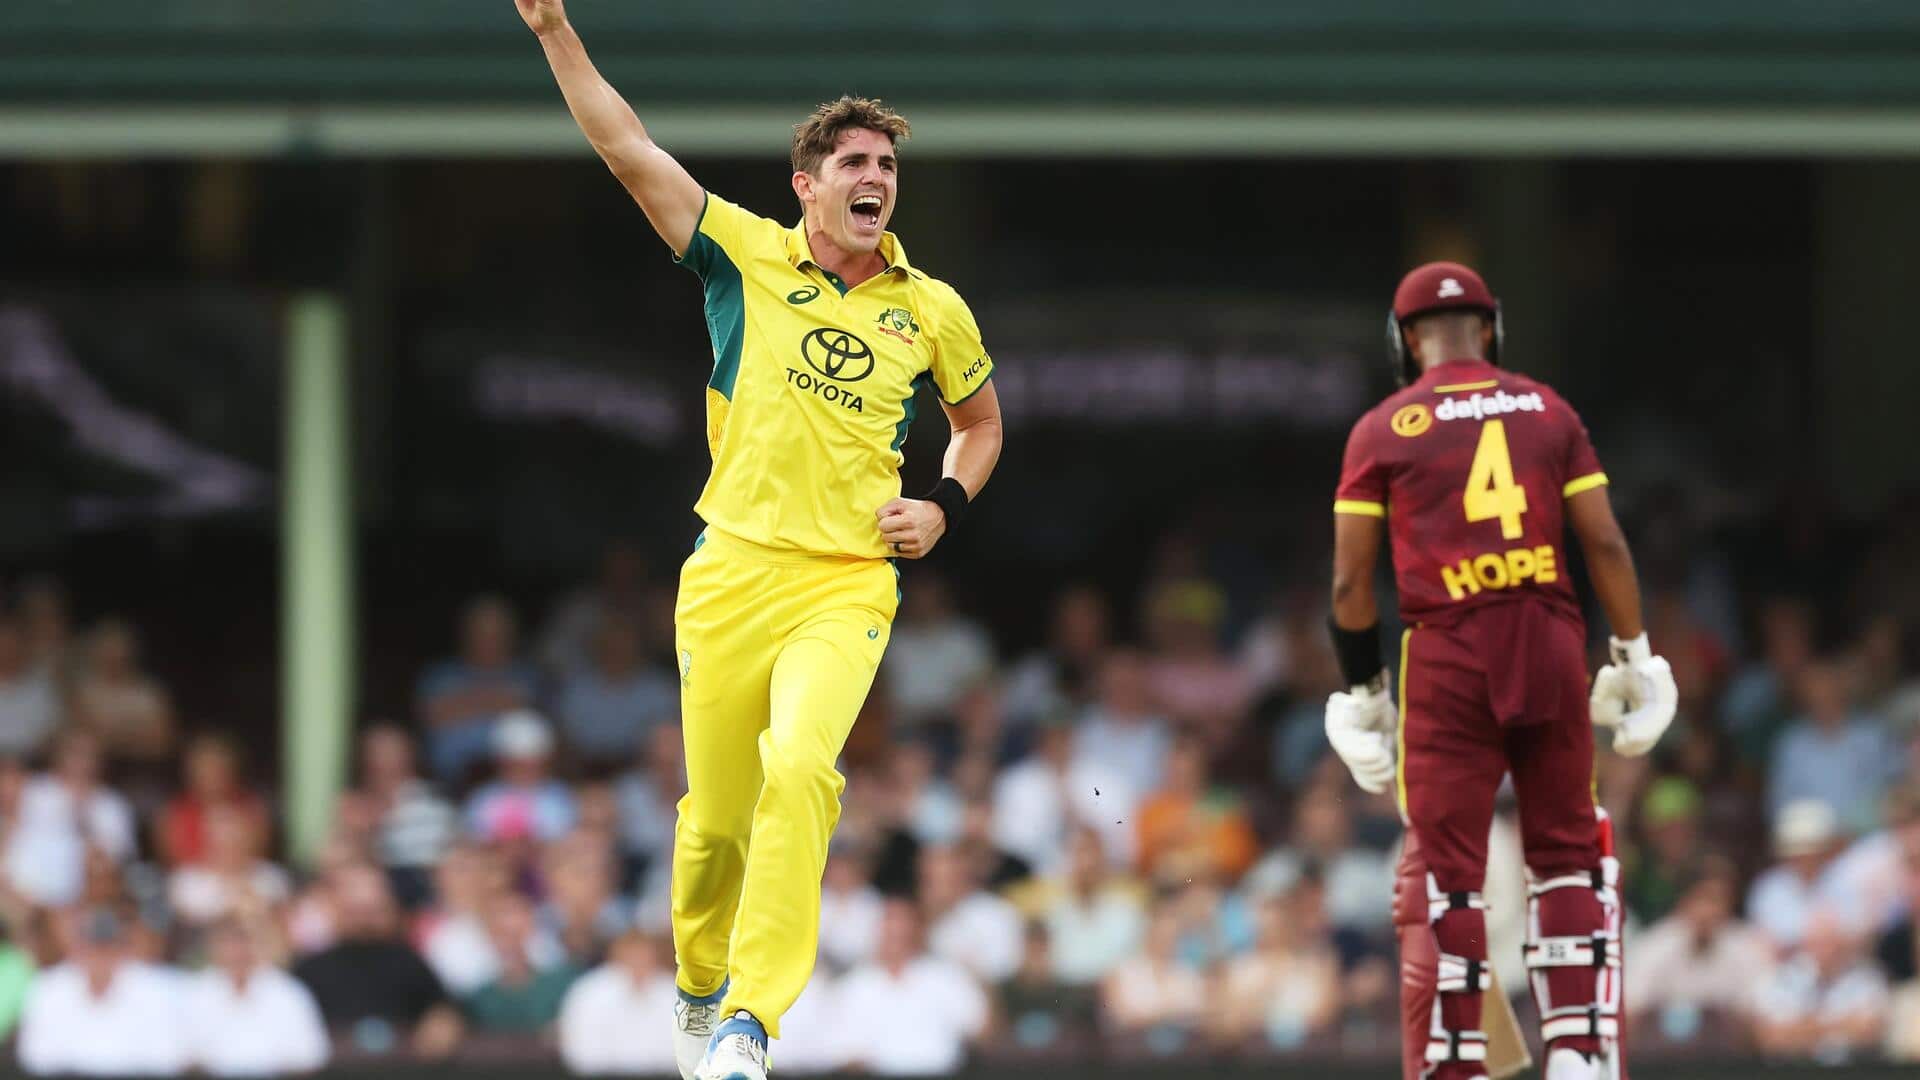 3rd ODI preview: Confident Australia seek whitewash against lackluster WI